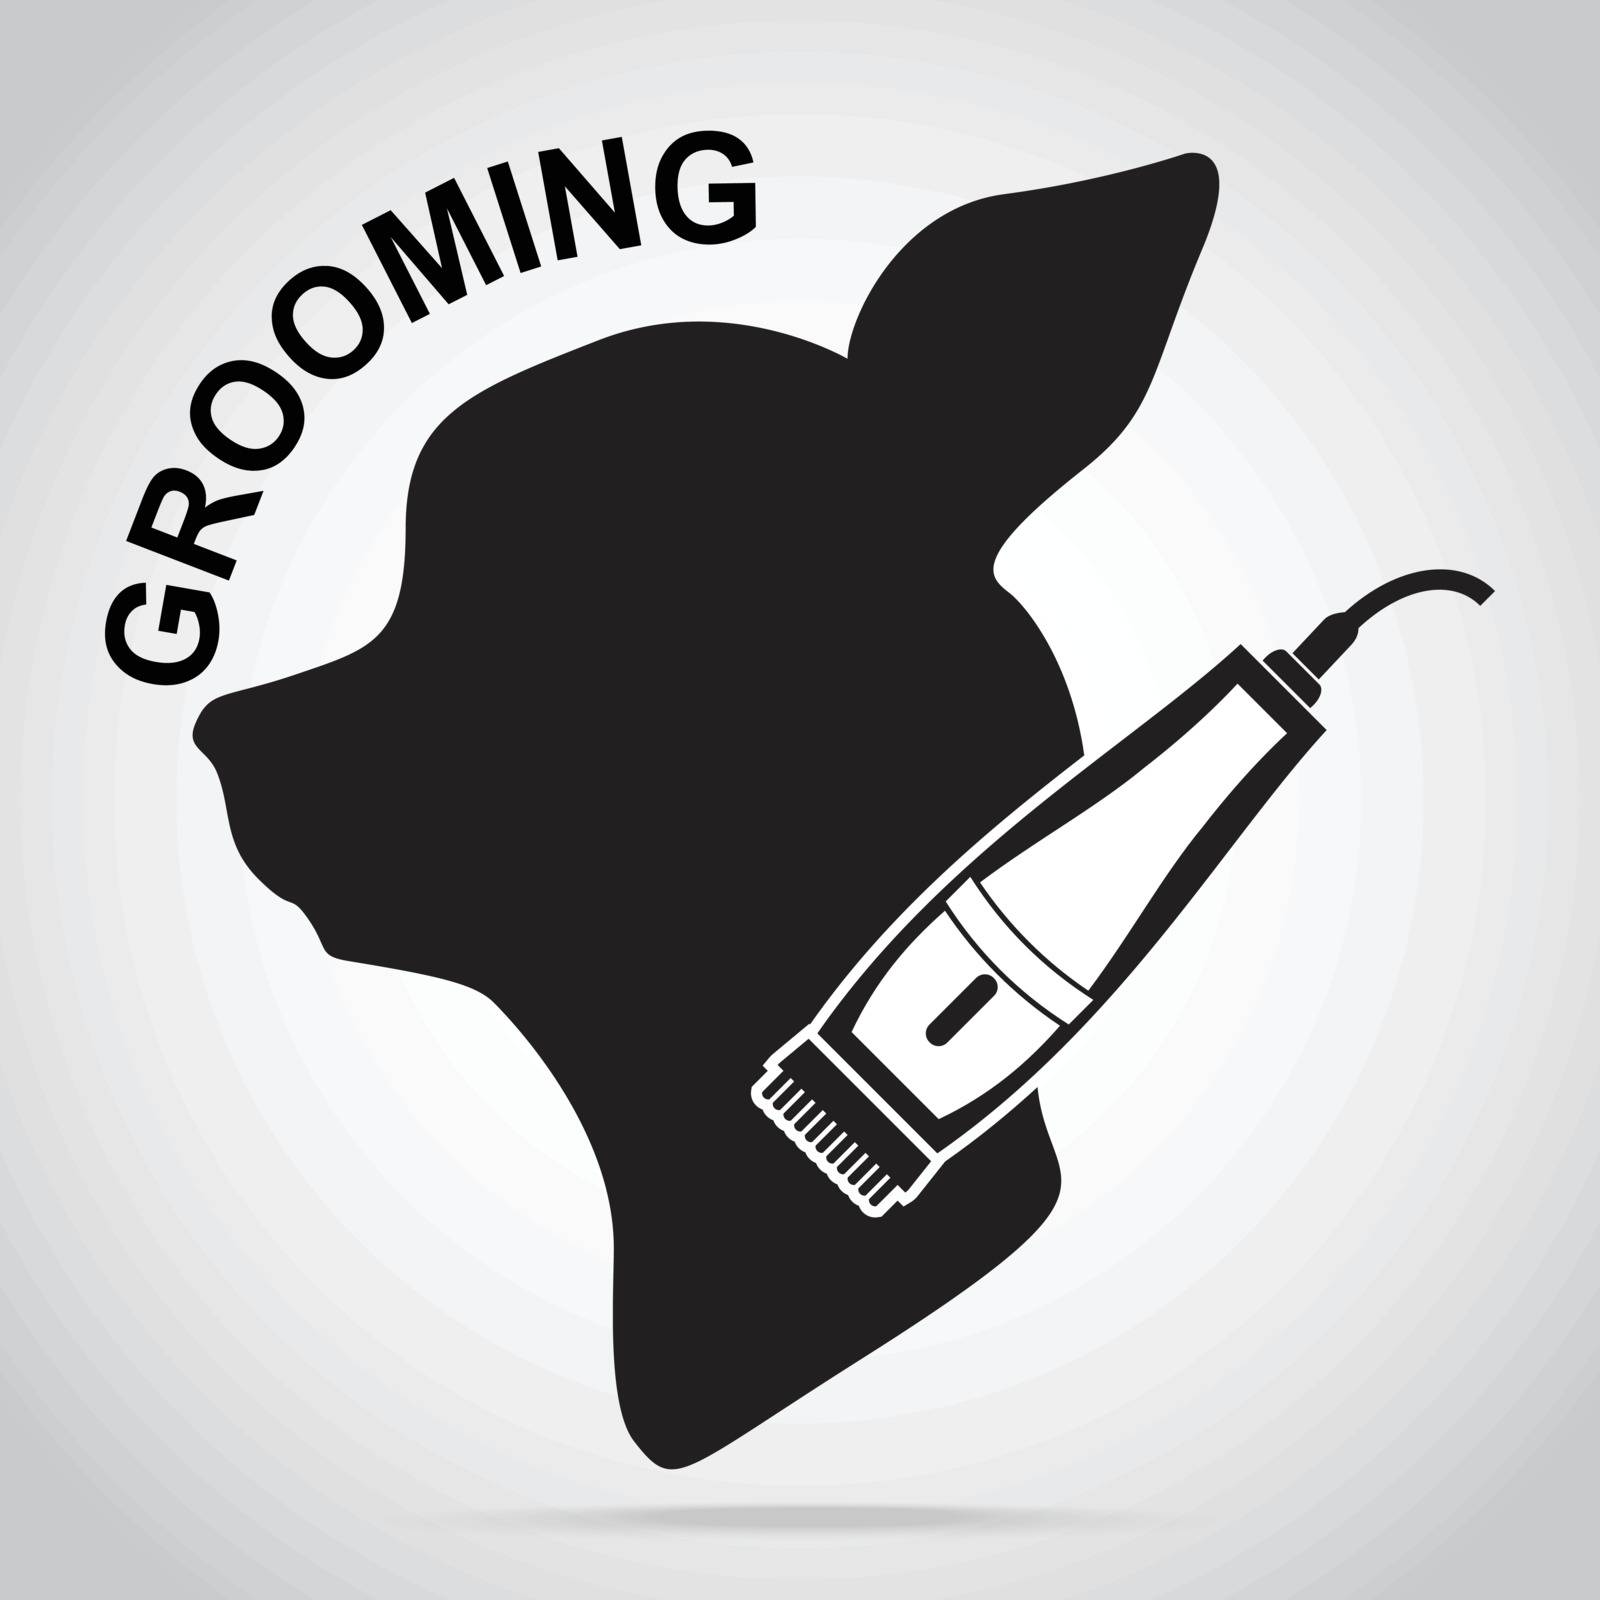 Dog grooming salon icon. Pet beauty salon sign illustration